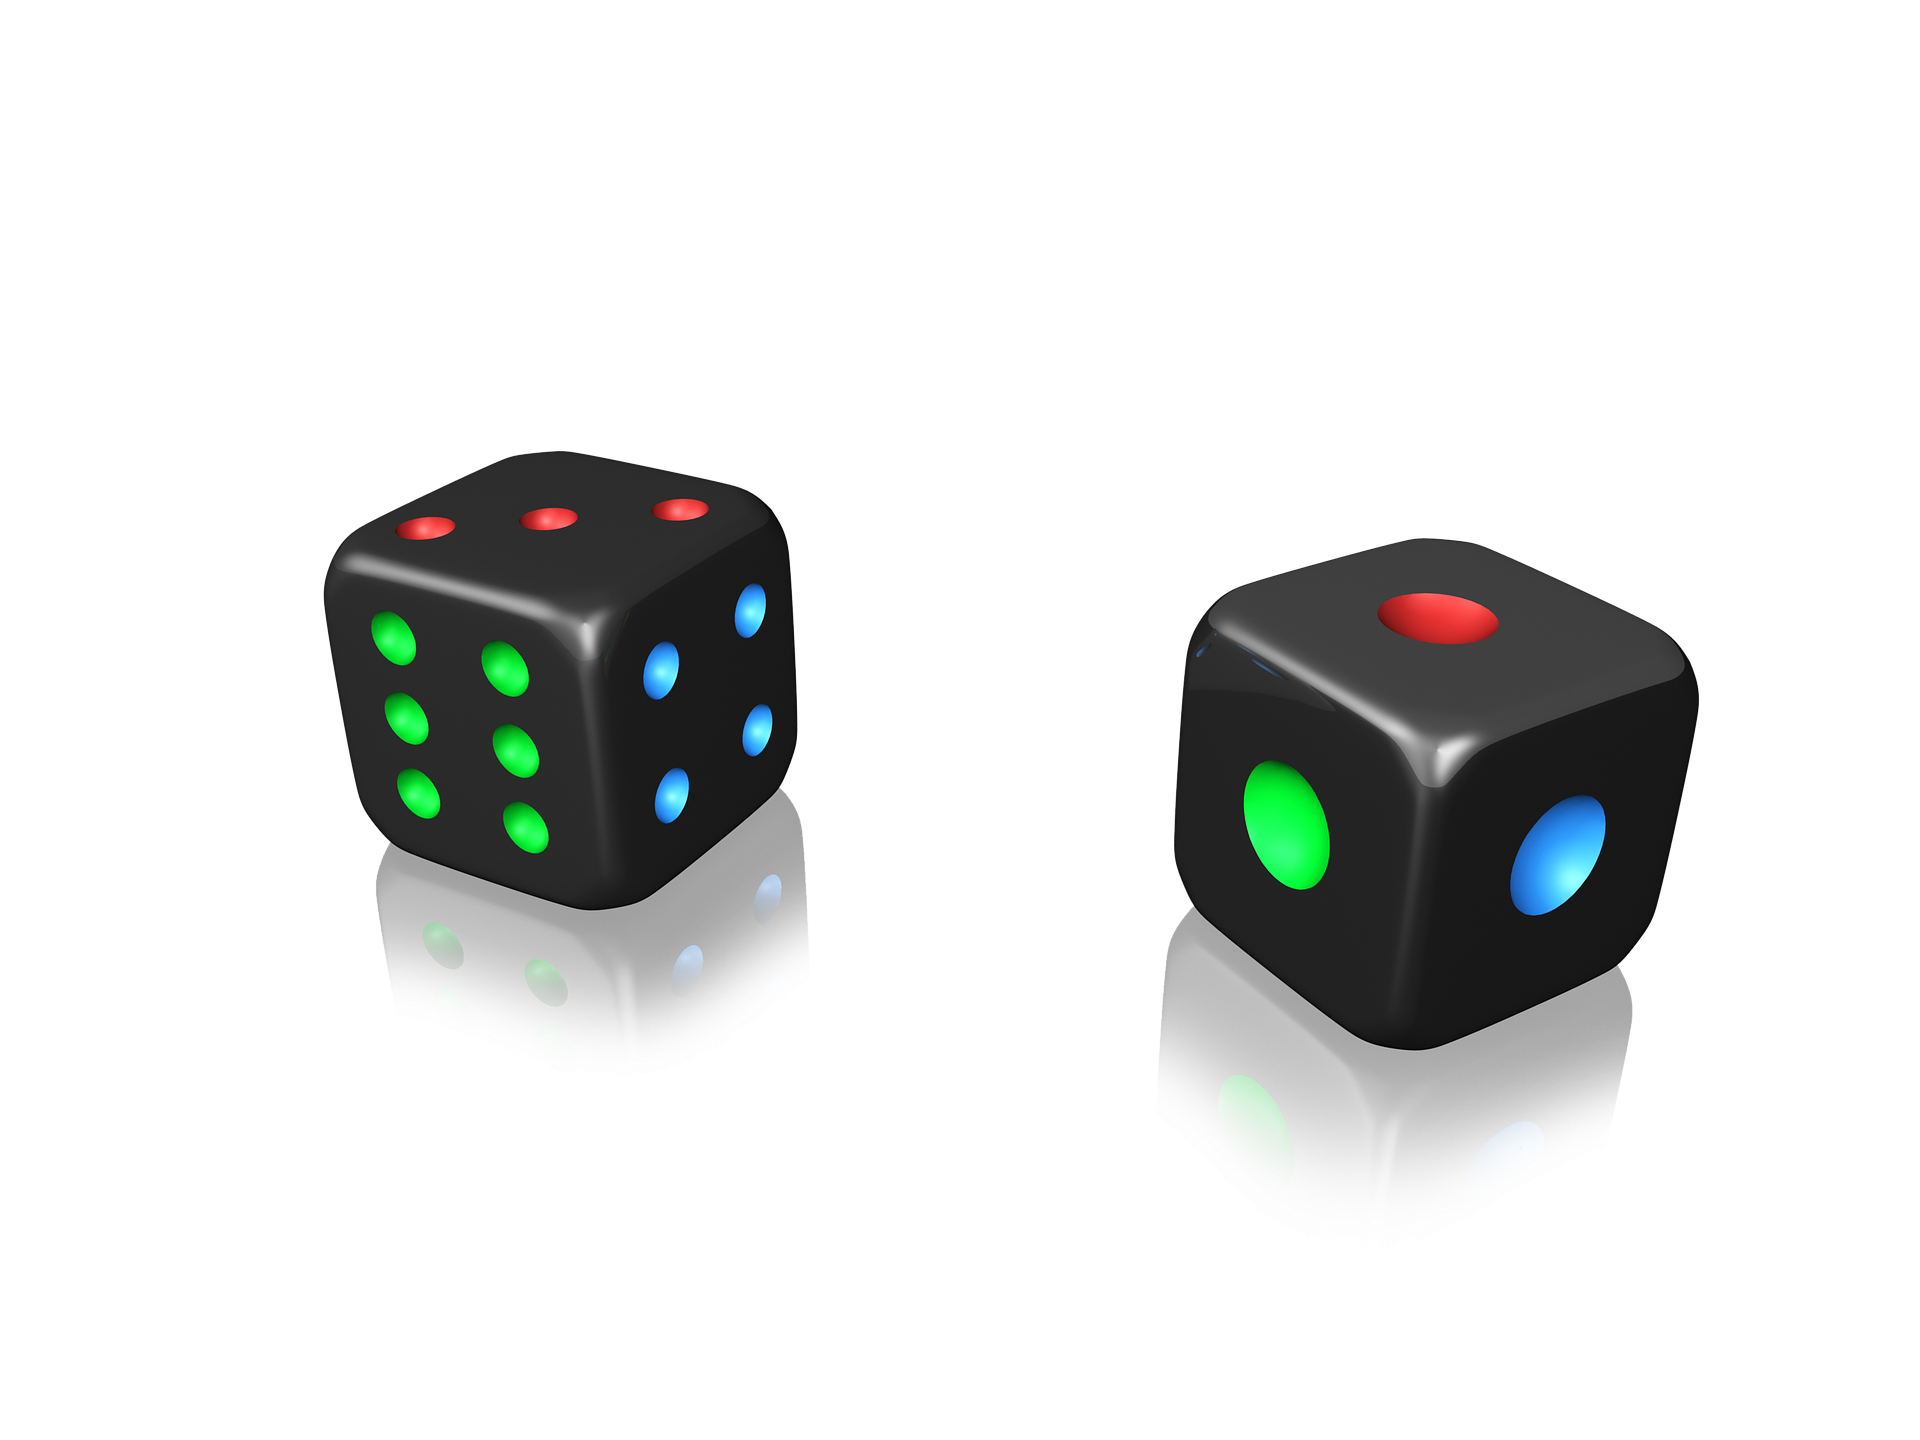 Two Black dice